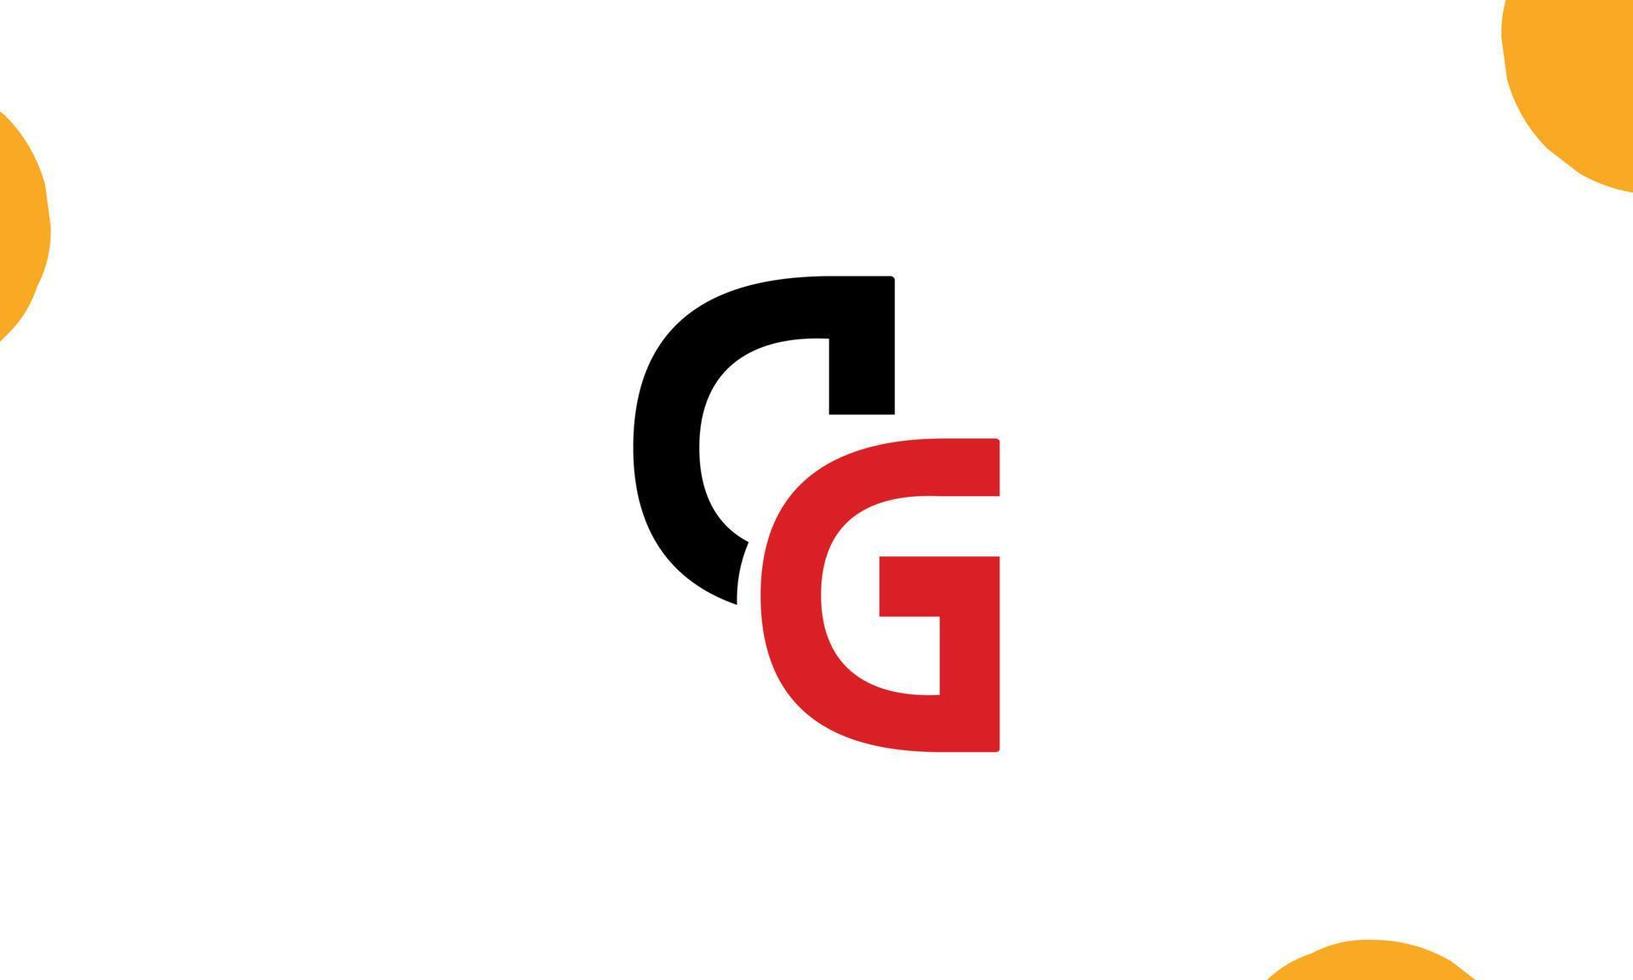 Alphabet letters Initials Monogram logo CG, CG, C and G vector